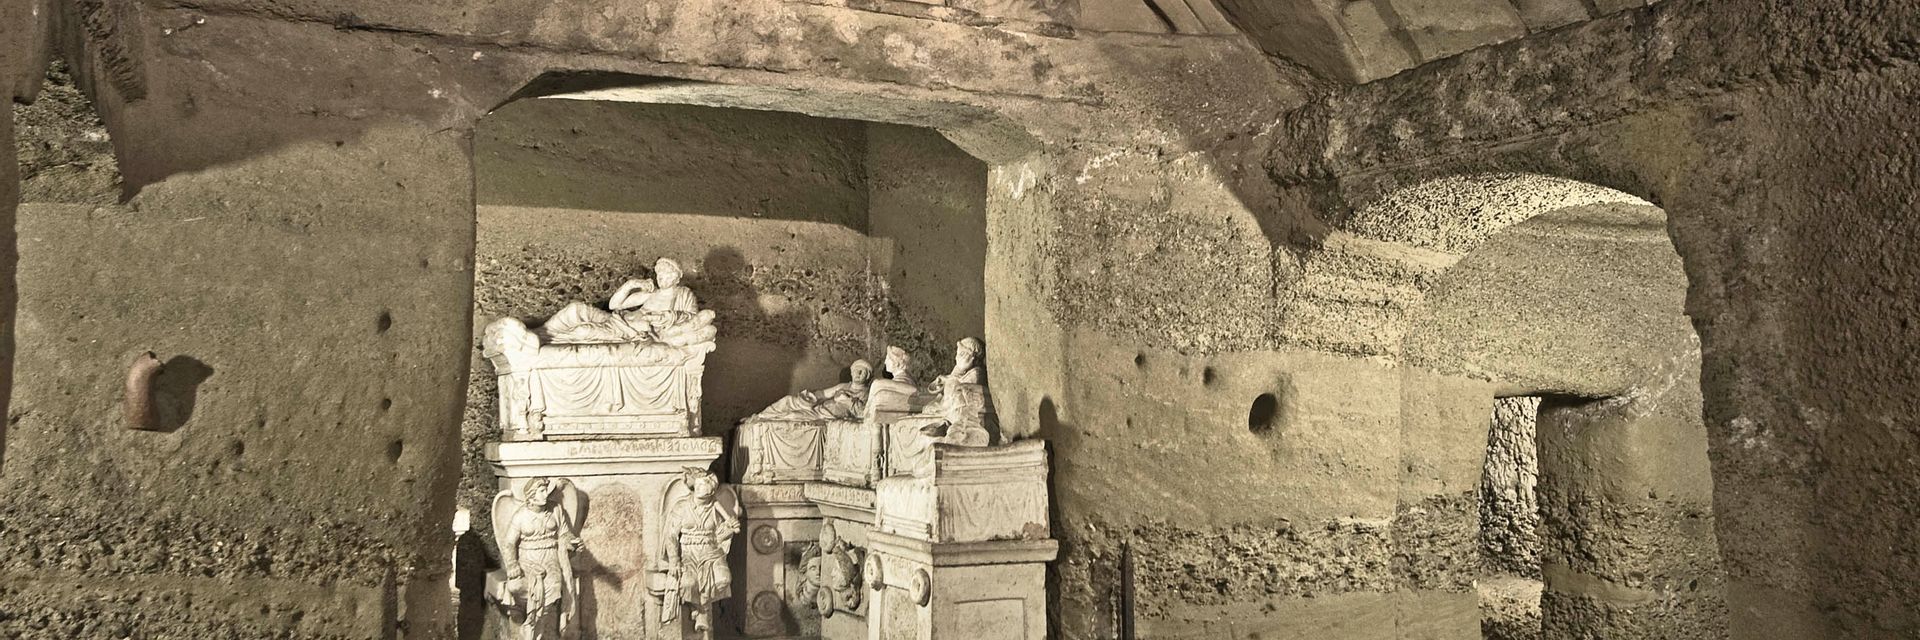 Hypogeum of the Volumni and Necropolis of the Palazzone